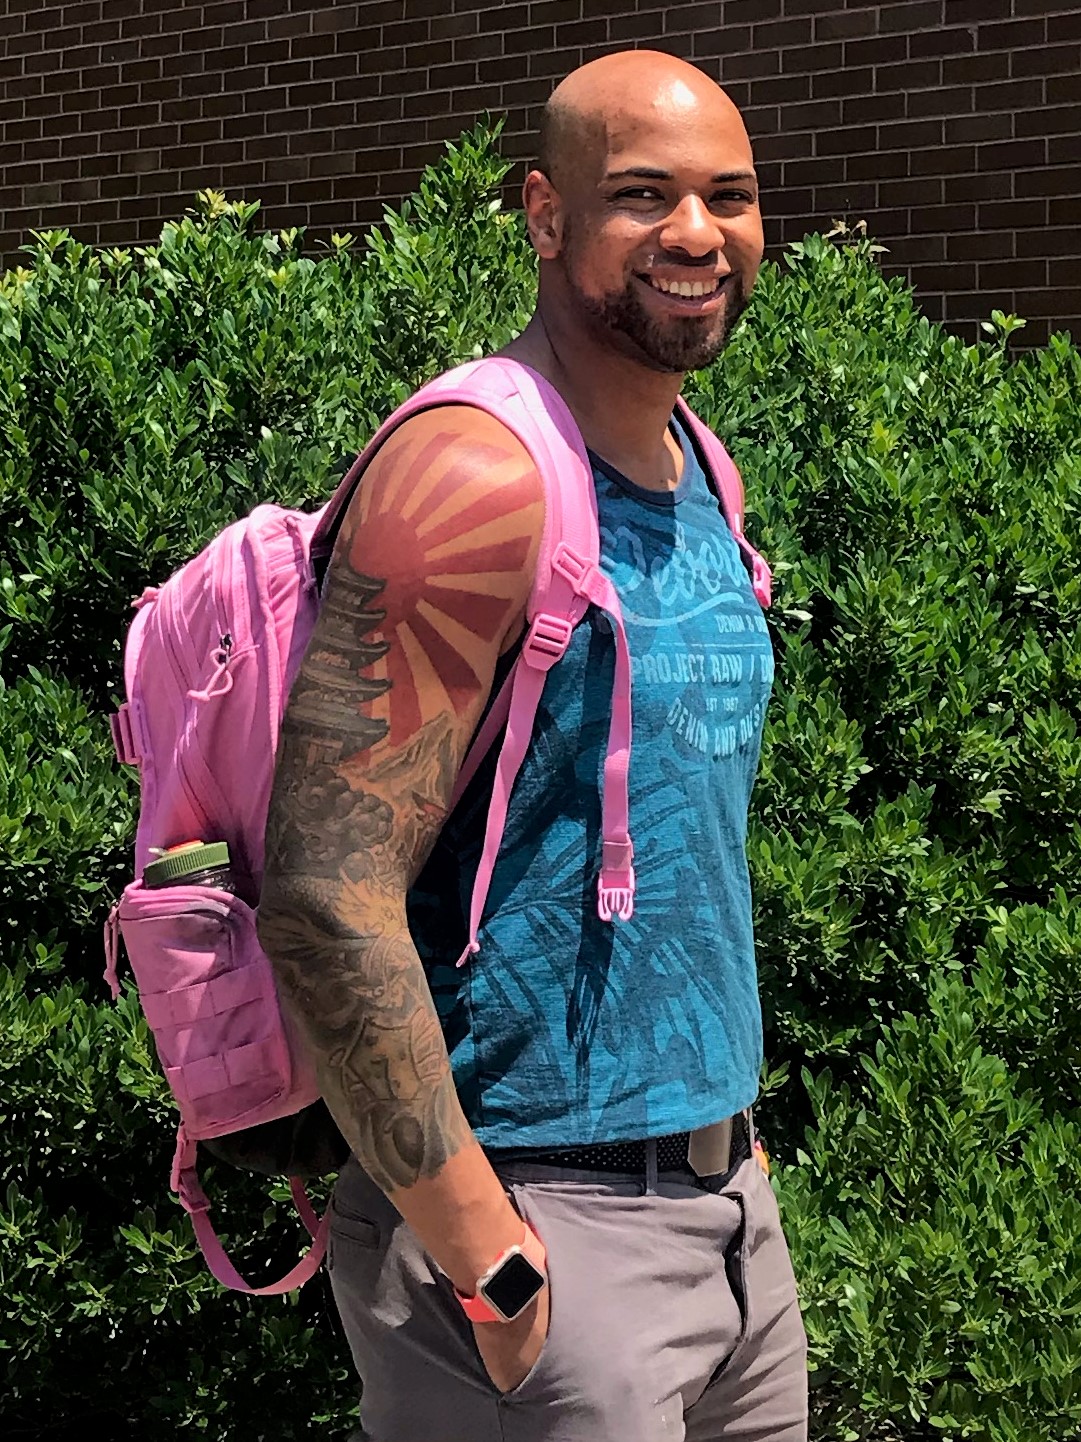 Queensborough undergraduate researcher and summer intern, Adam McConnell, wearing a pink bookbag